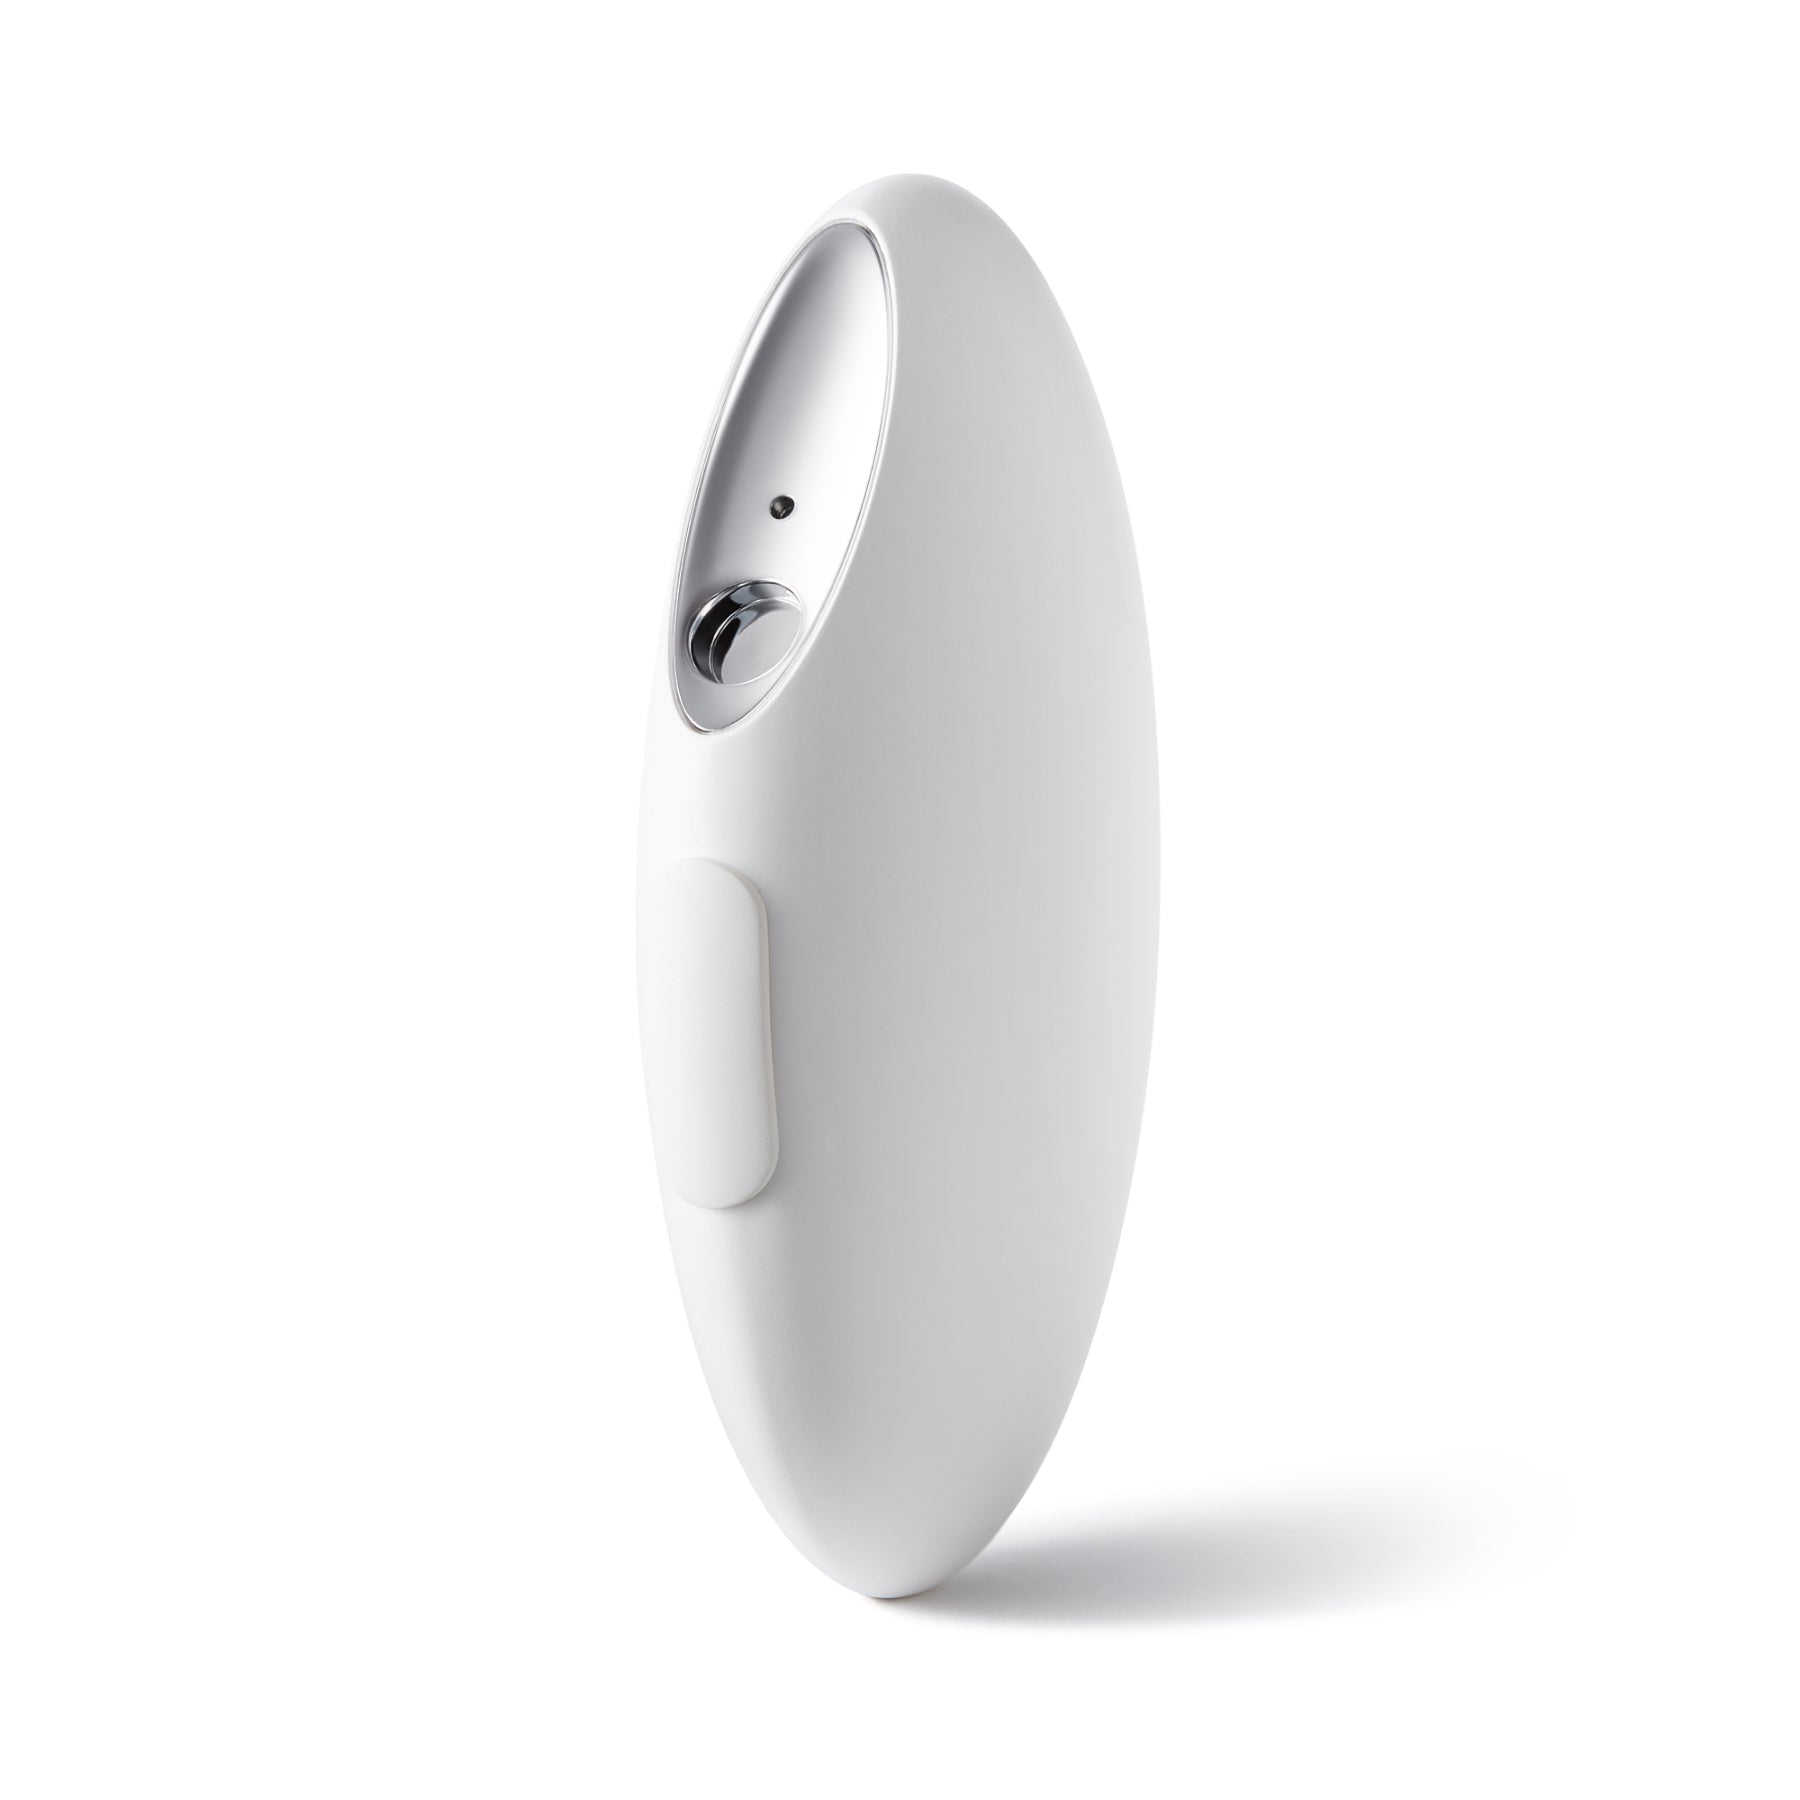 BLOOMY LOTUS Pebble Portable Aroma Diffuser (White) – rechargeable | Isetan KL Online Store